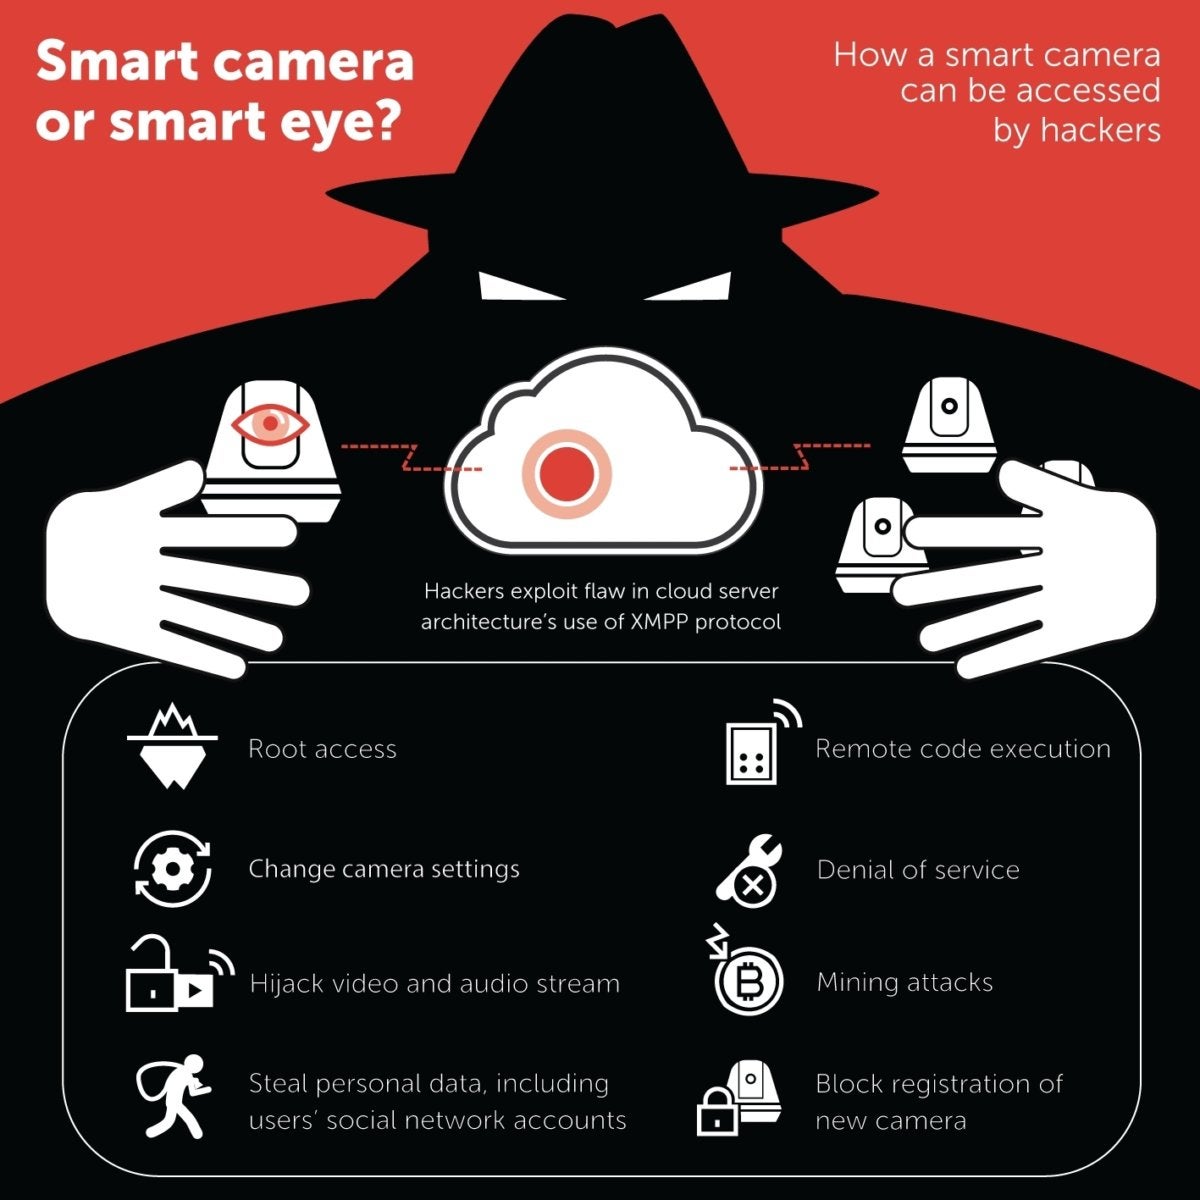 Kaspersky Lab finds security flaws in smart cameras